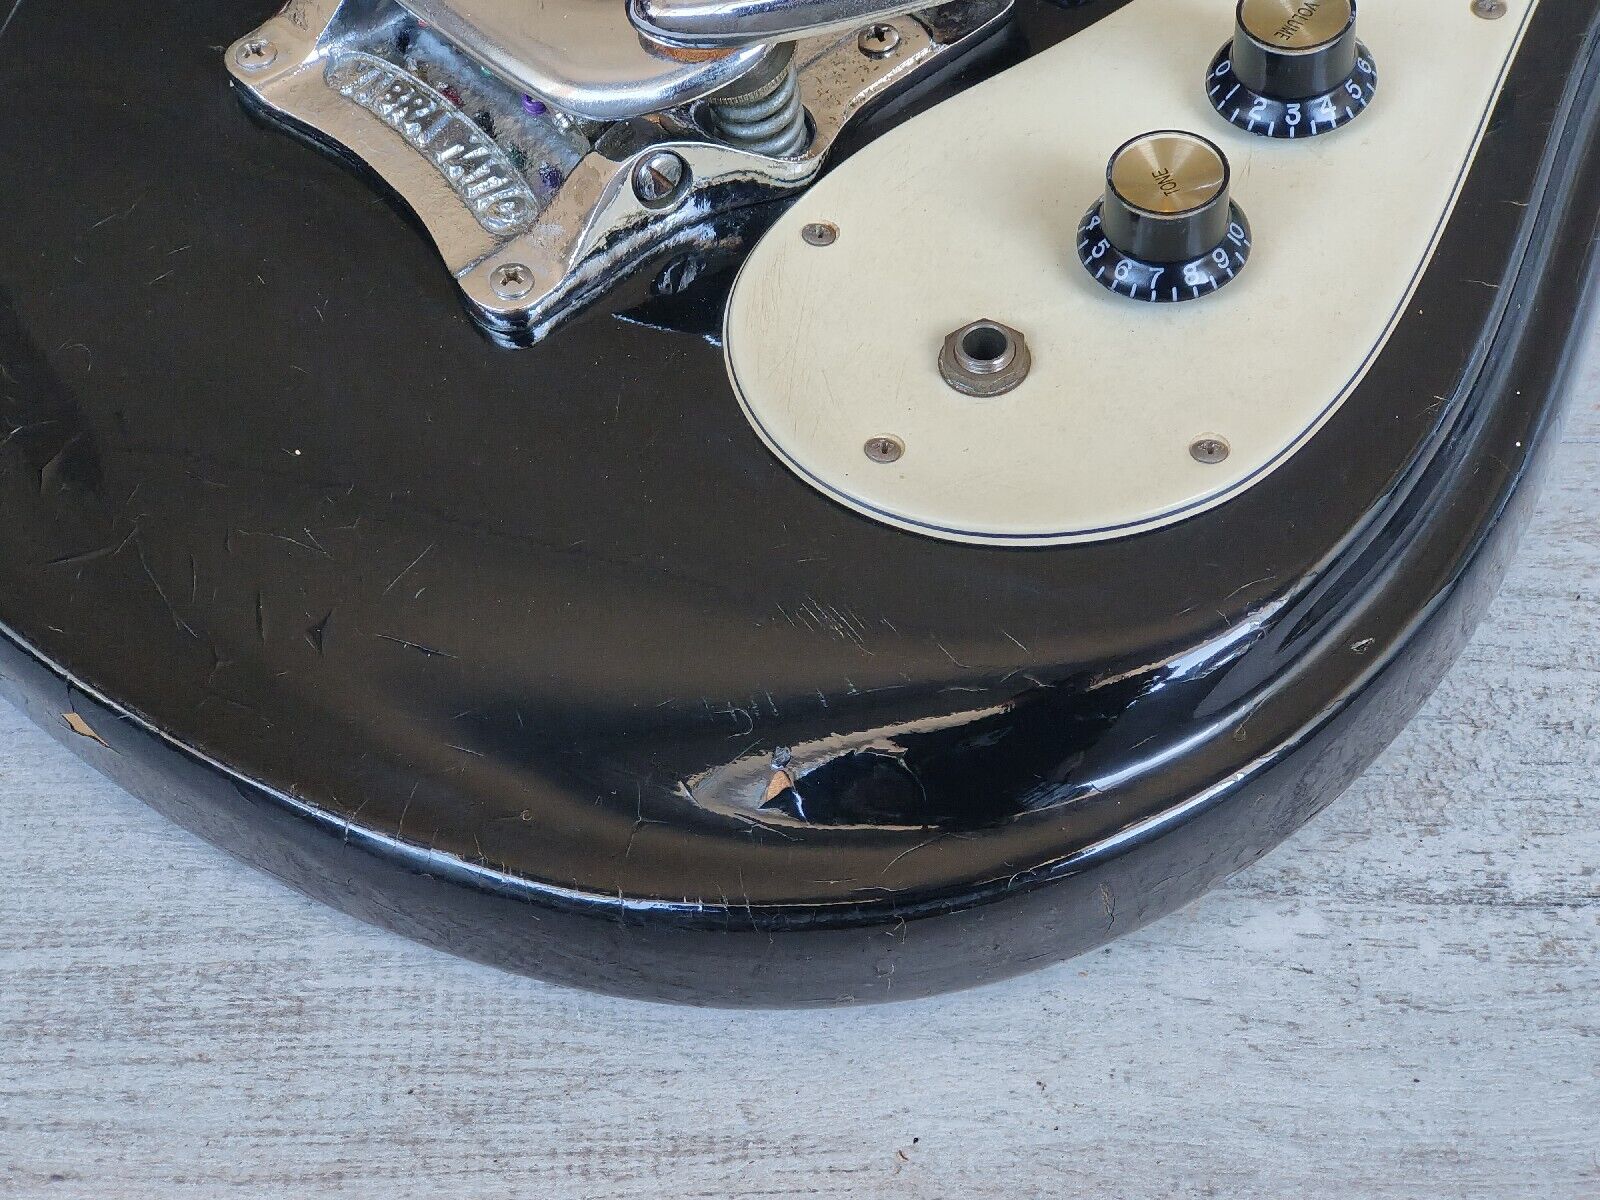 1960's Morales Japan (Mosrite) Ventures Offset Guitar (Gloss Black)